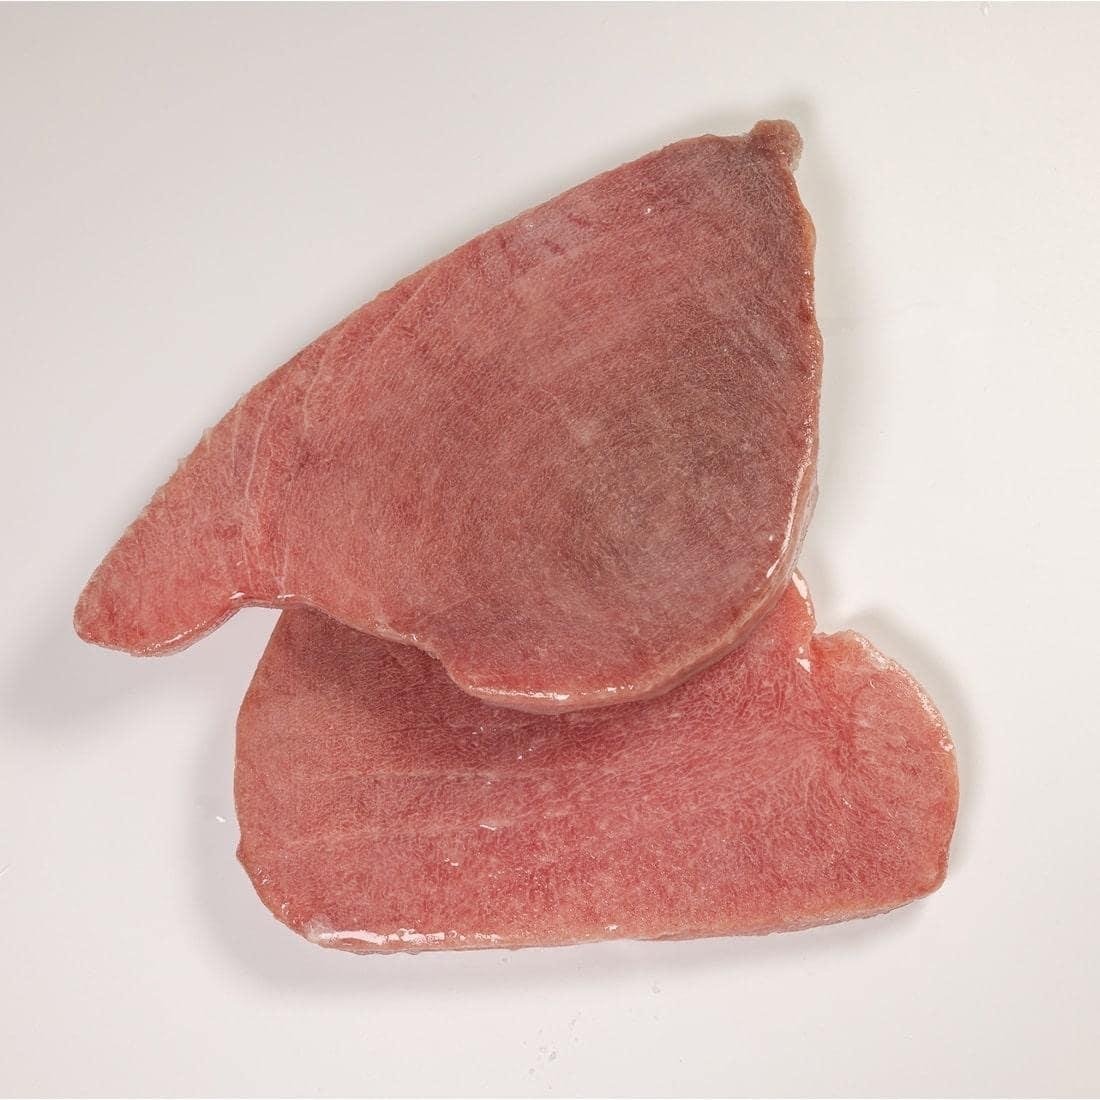 Image 0 of Tuna slices